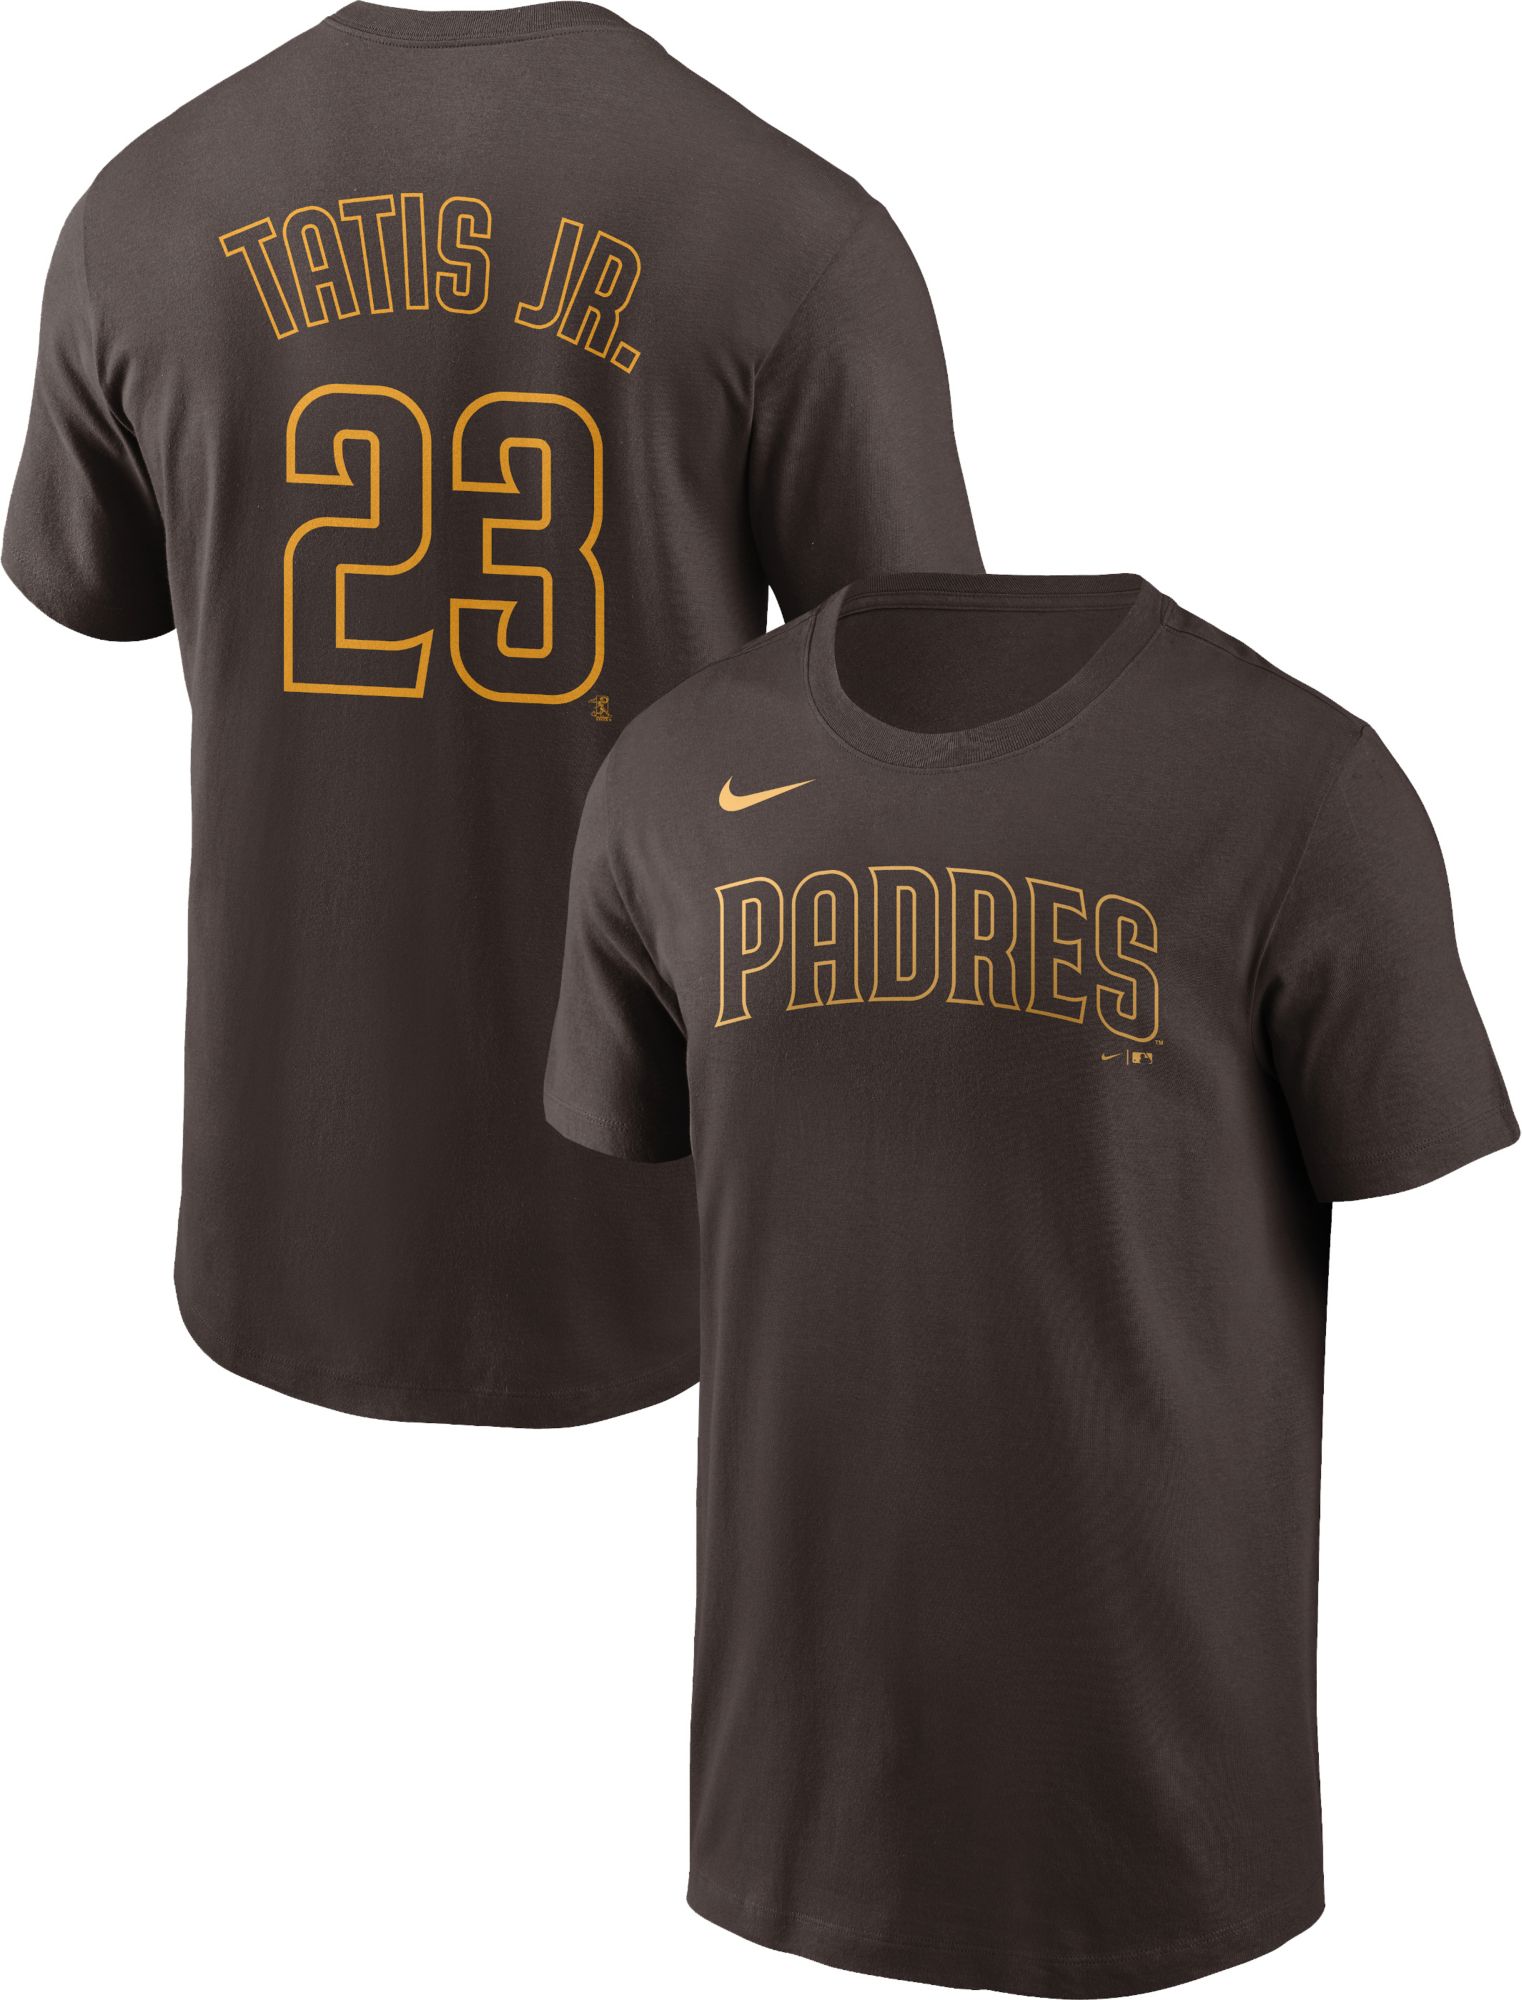 Mil San Diego Padres Fernando Tatis Jr. Autographed Brown Nike Jersey Size XXL 23 Beckett BAS Stock #201915